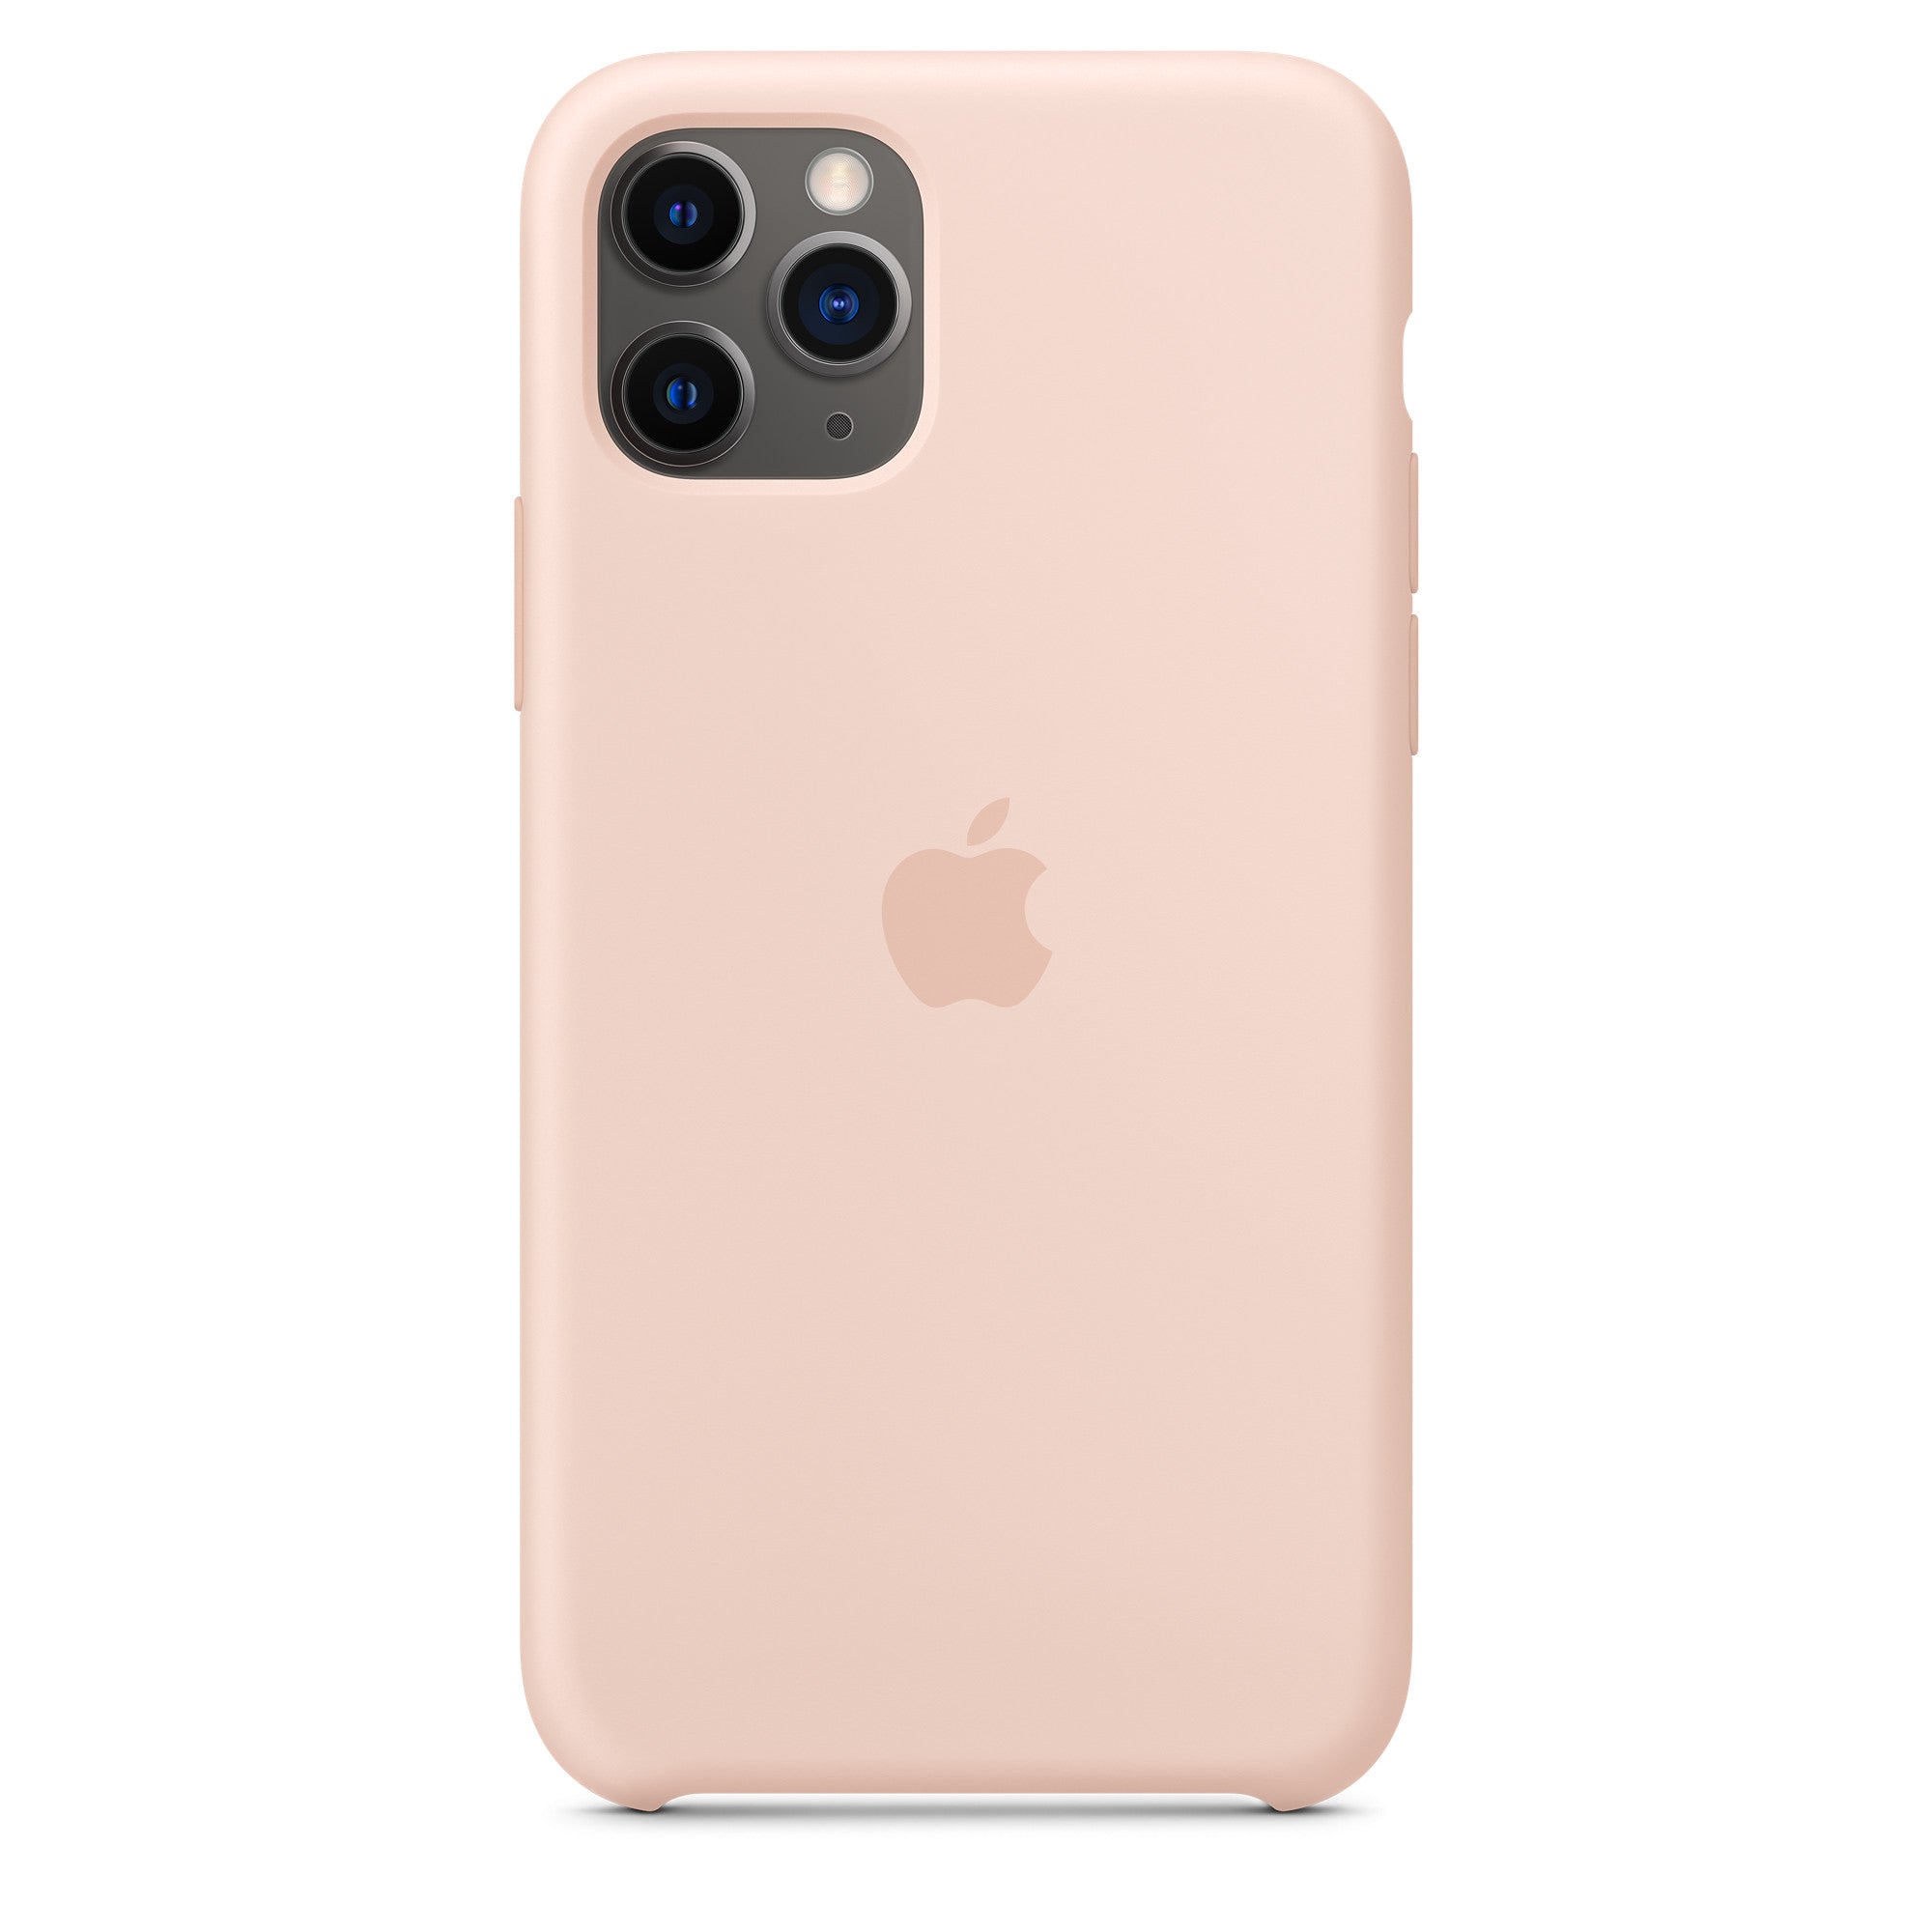 Apple iPhone 11 Pro Max Silikon Case - Sandrosa